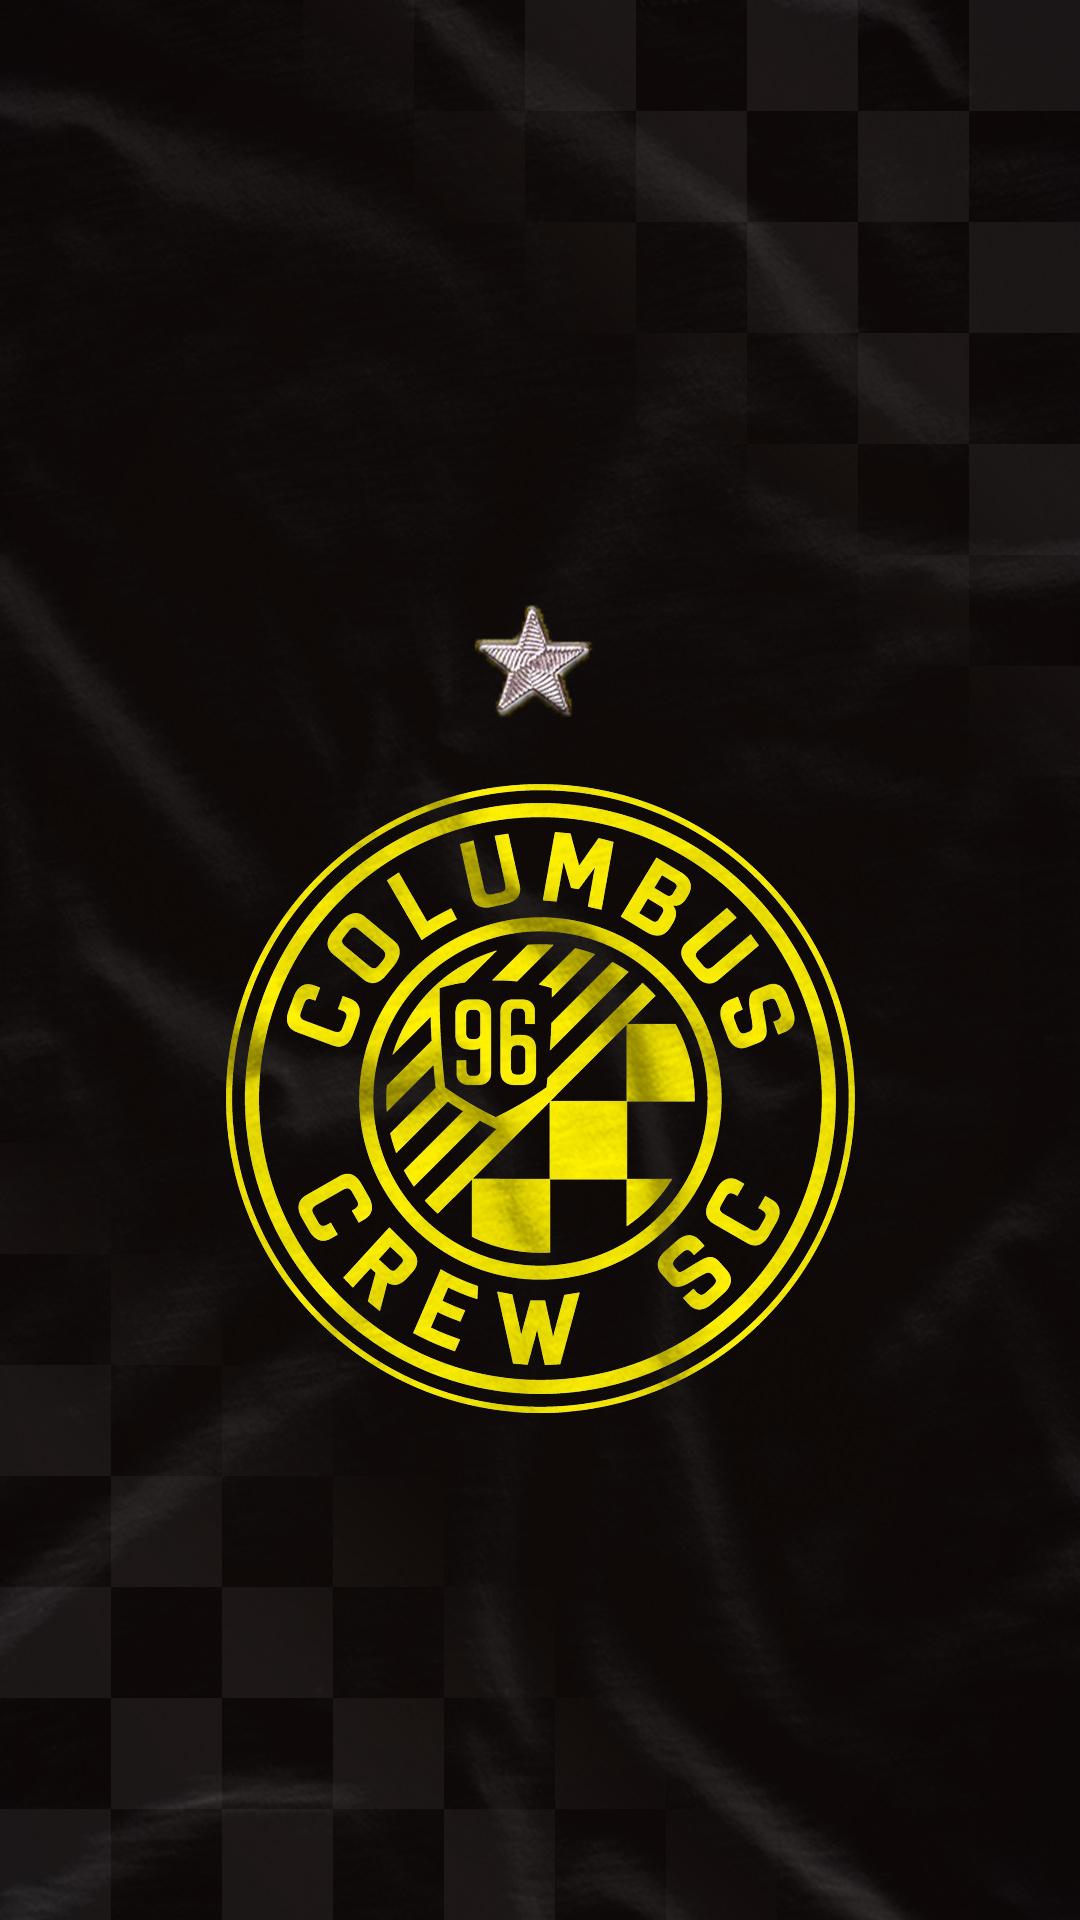 Wallpaper Downloads. Columbus Crew SC